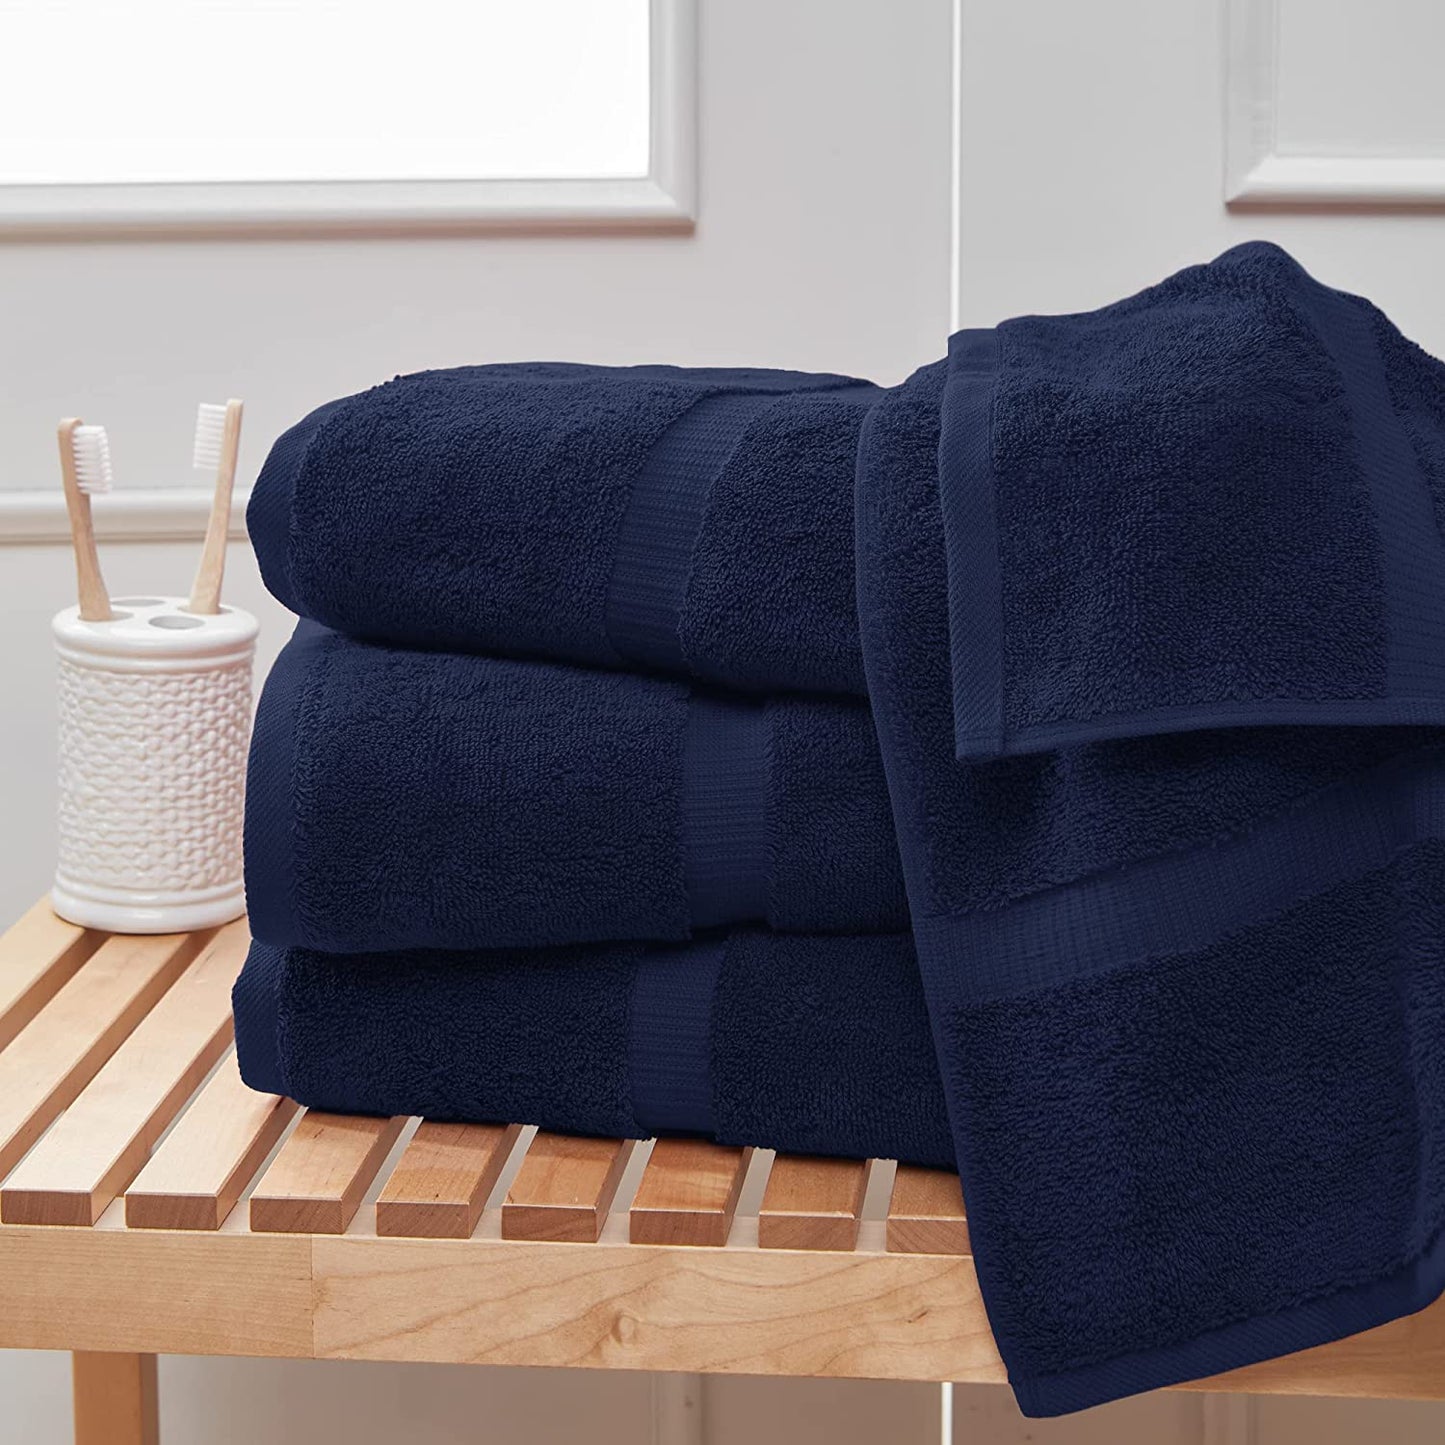 Premium Turkish Cotton Super Soft and Absorbent Towels (4-Piece Bath Towels, Navy Blue)